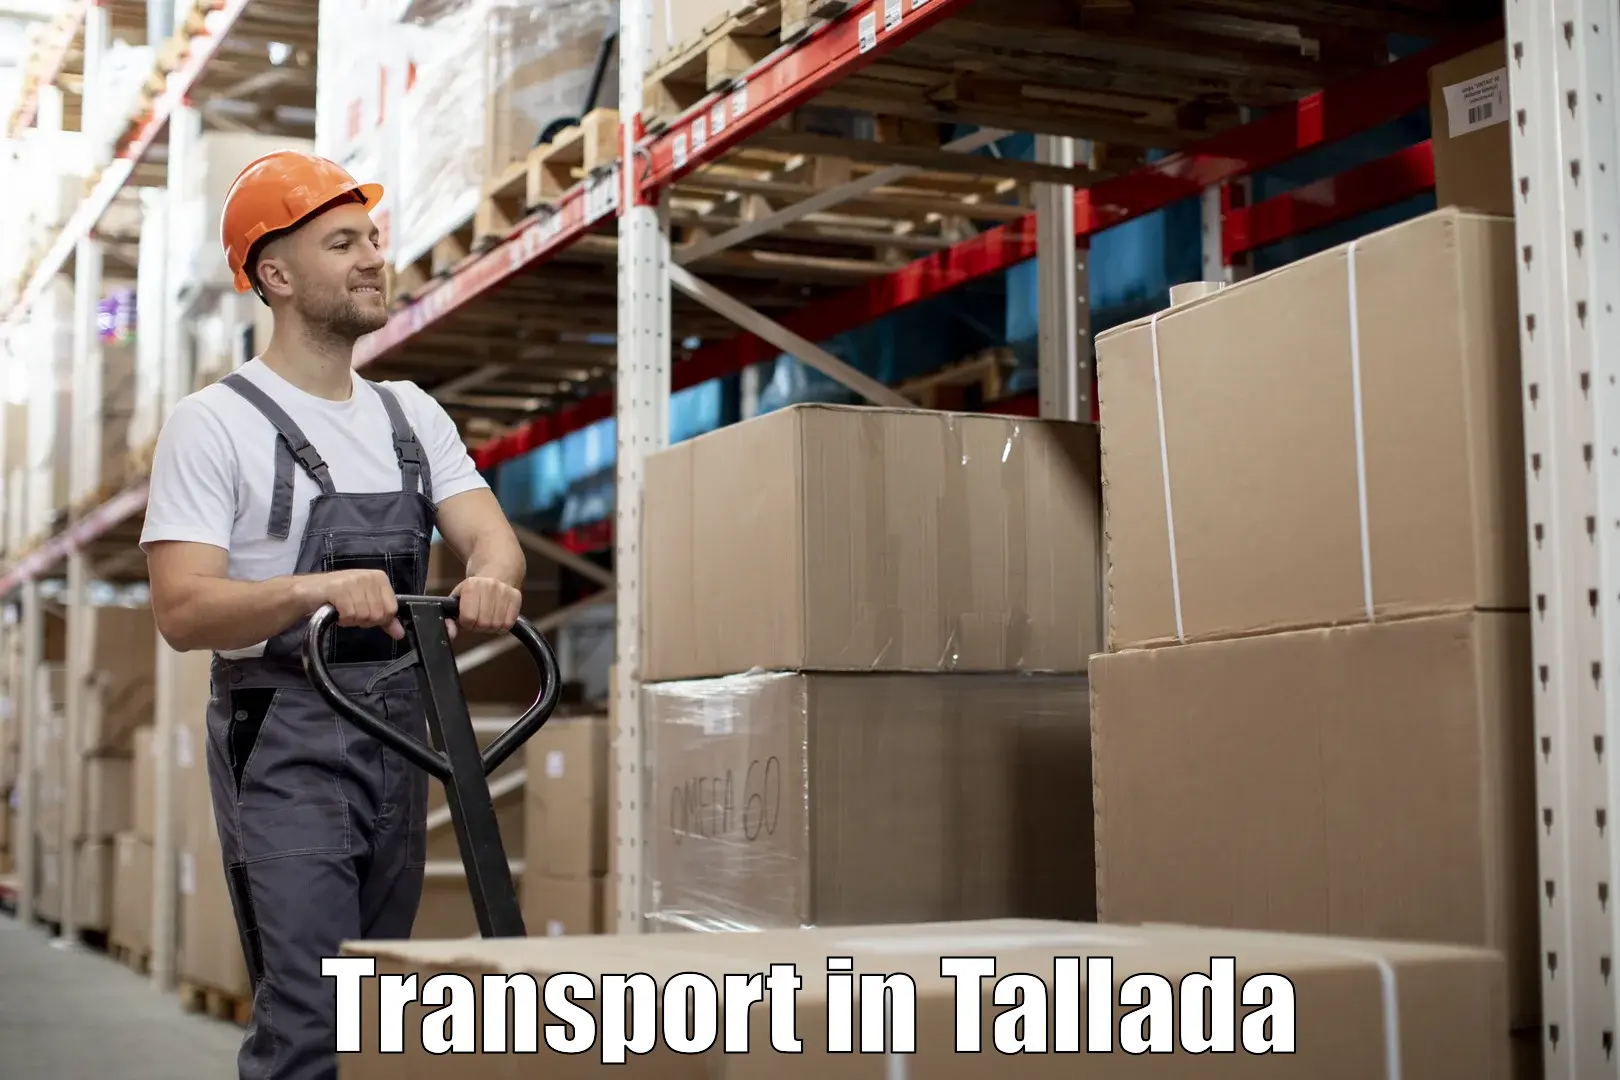 Cargo train transport services in Tallada